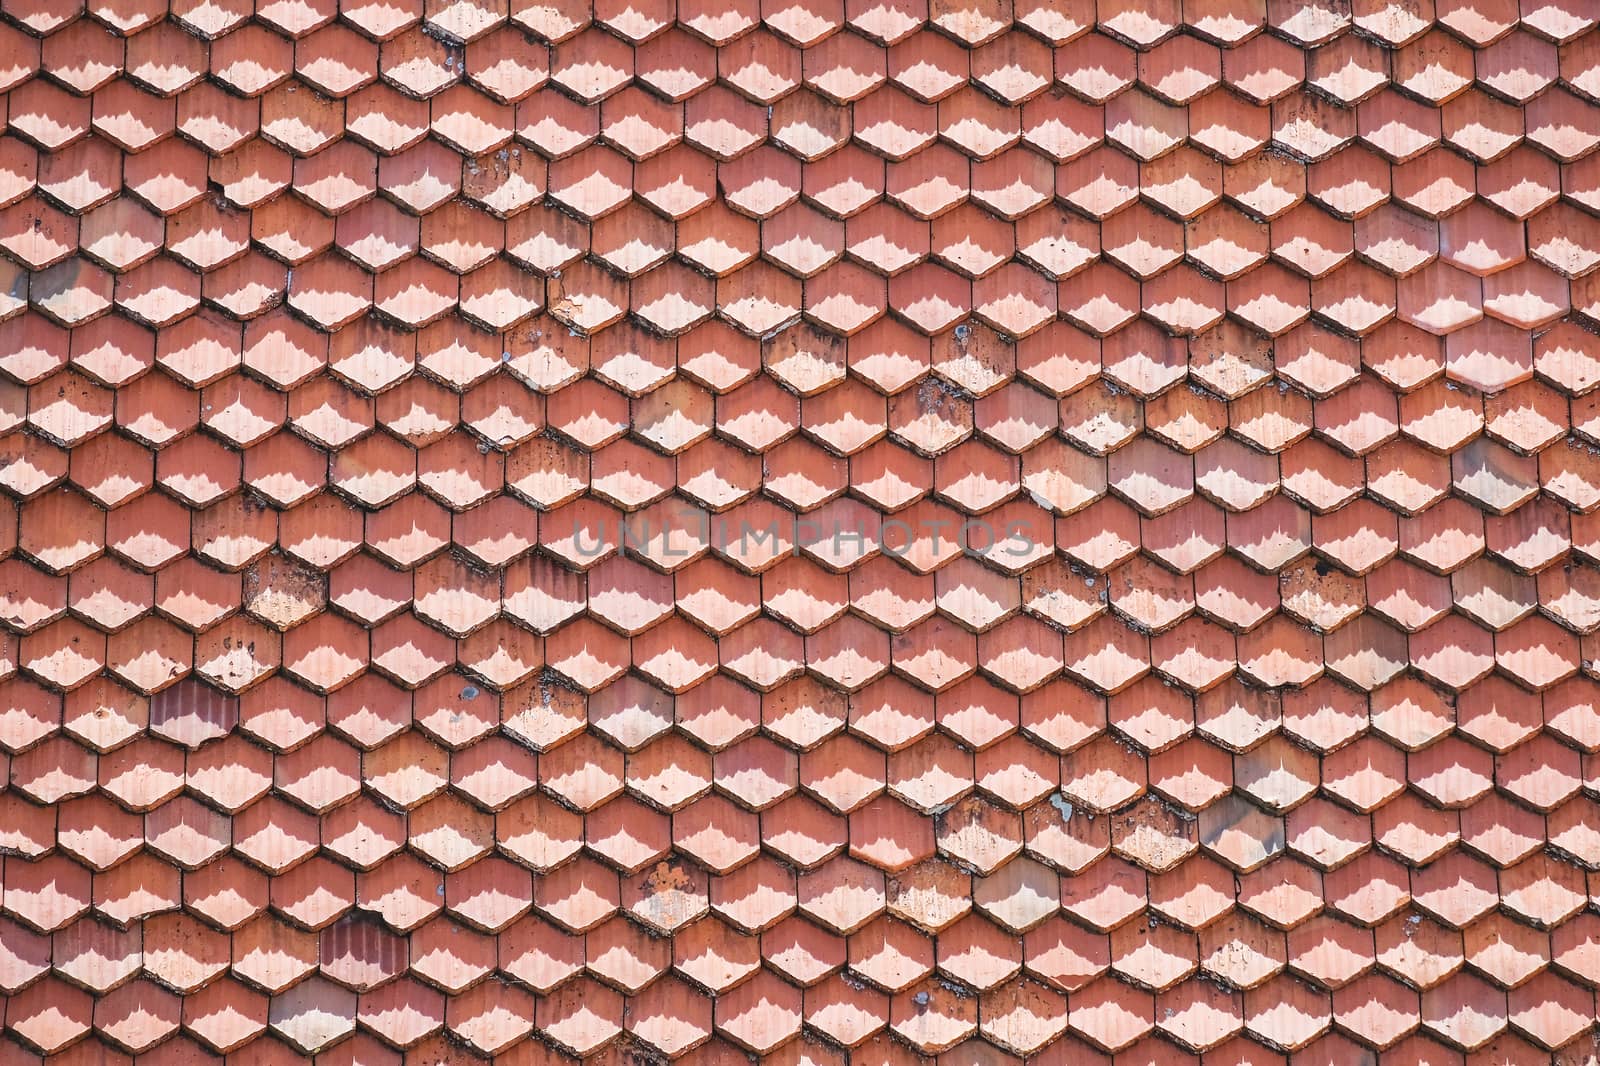 Roof tiles pattern in daylight